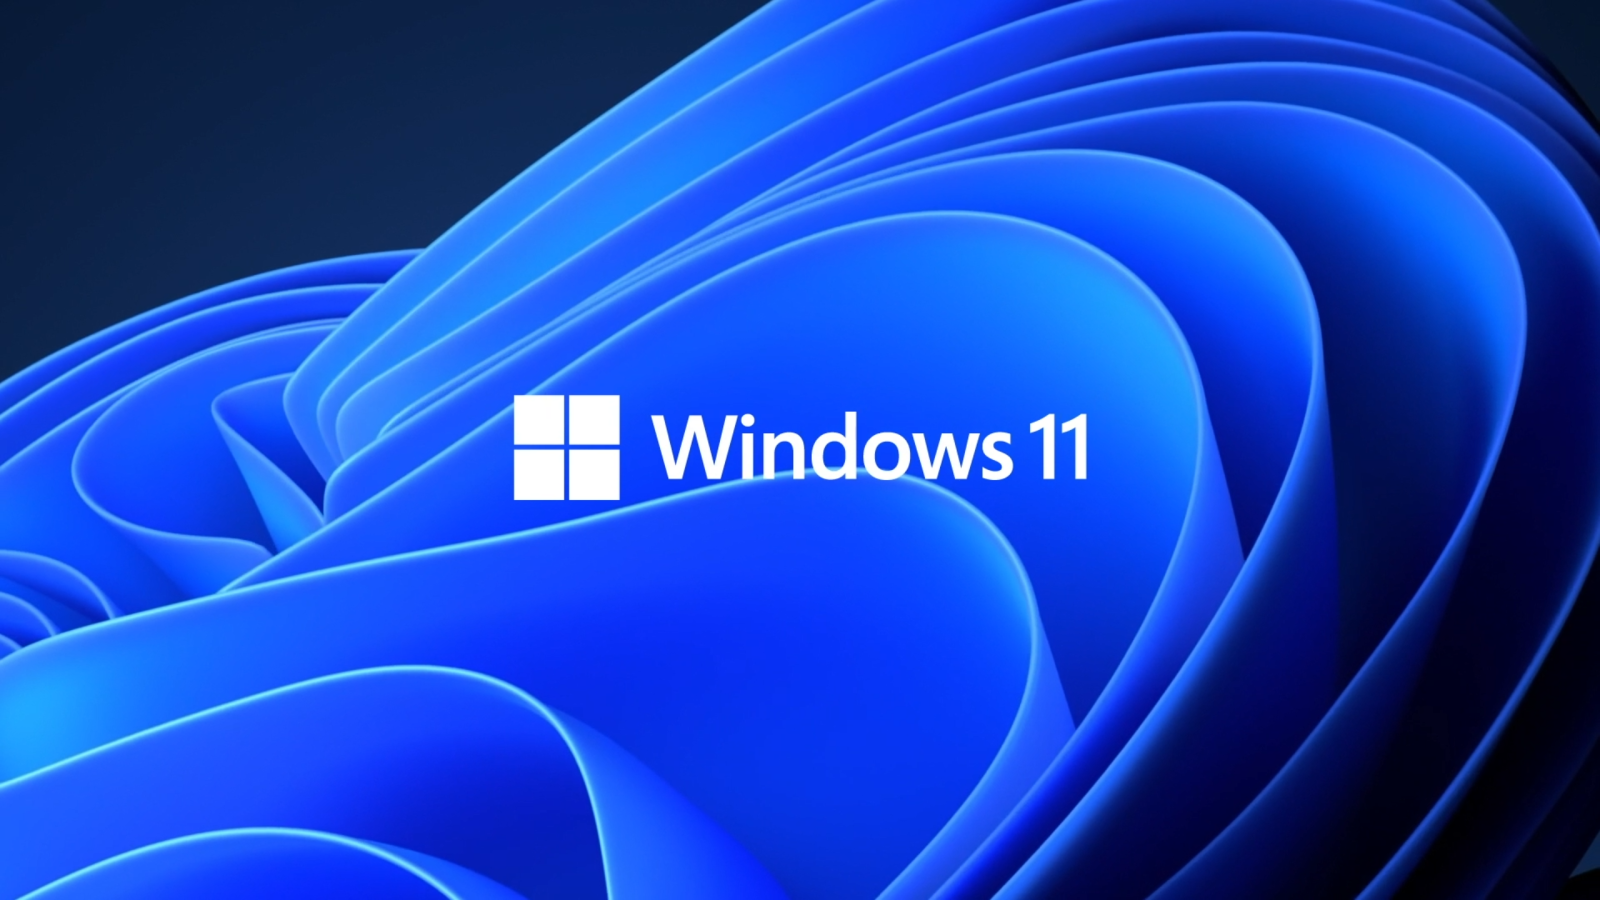 Windows 11 Pro ના સેટઅપ માટે આ બે વસ્તુઓ જરૂરી હશે,માઇક્રોસોફ્ટ ટૂંક સમયમાં જ કરશે રોલઆઉટ